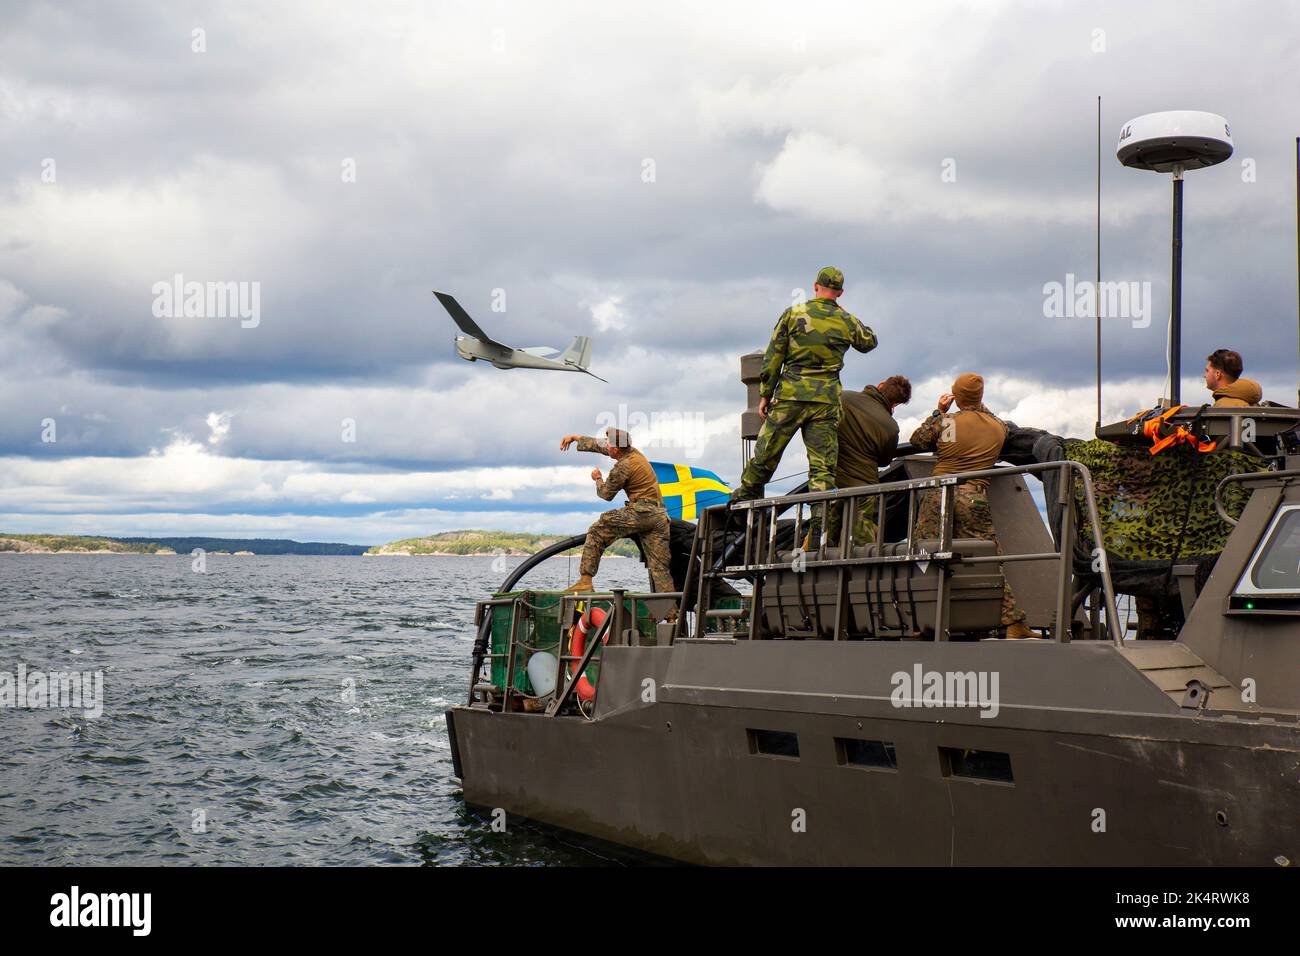 Combat boat -Fotos und -Bildmaterial in hoher Auflösung – Alamy